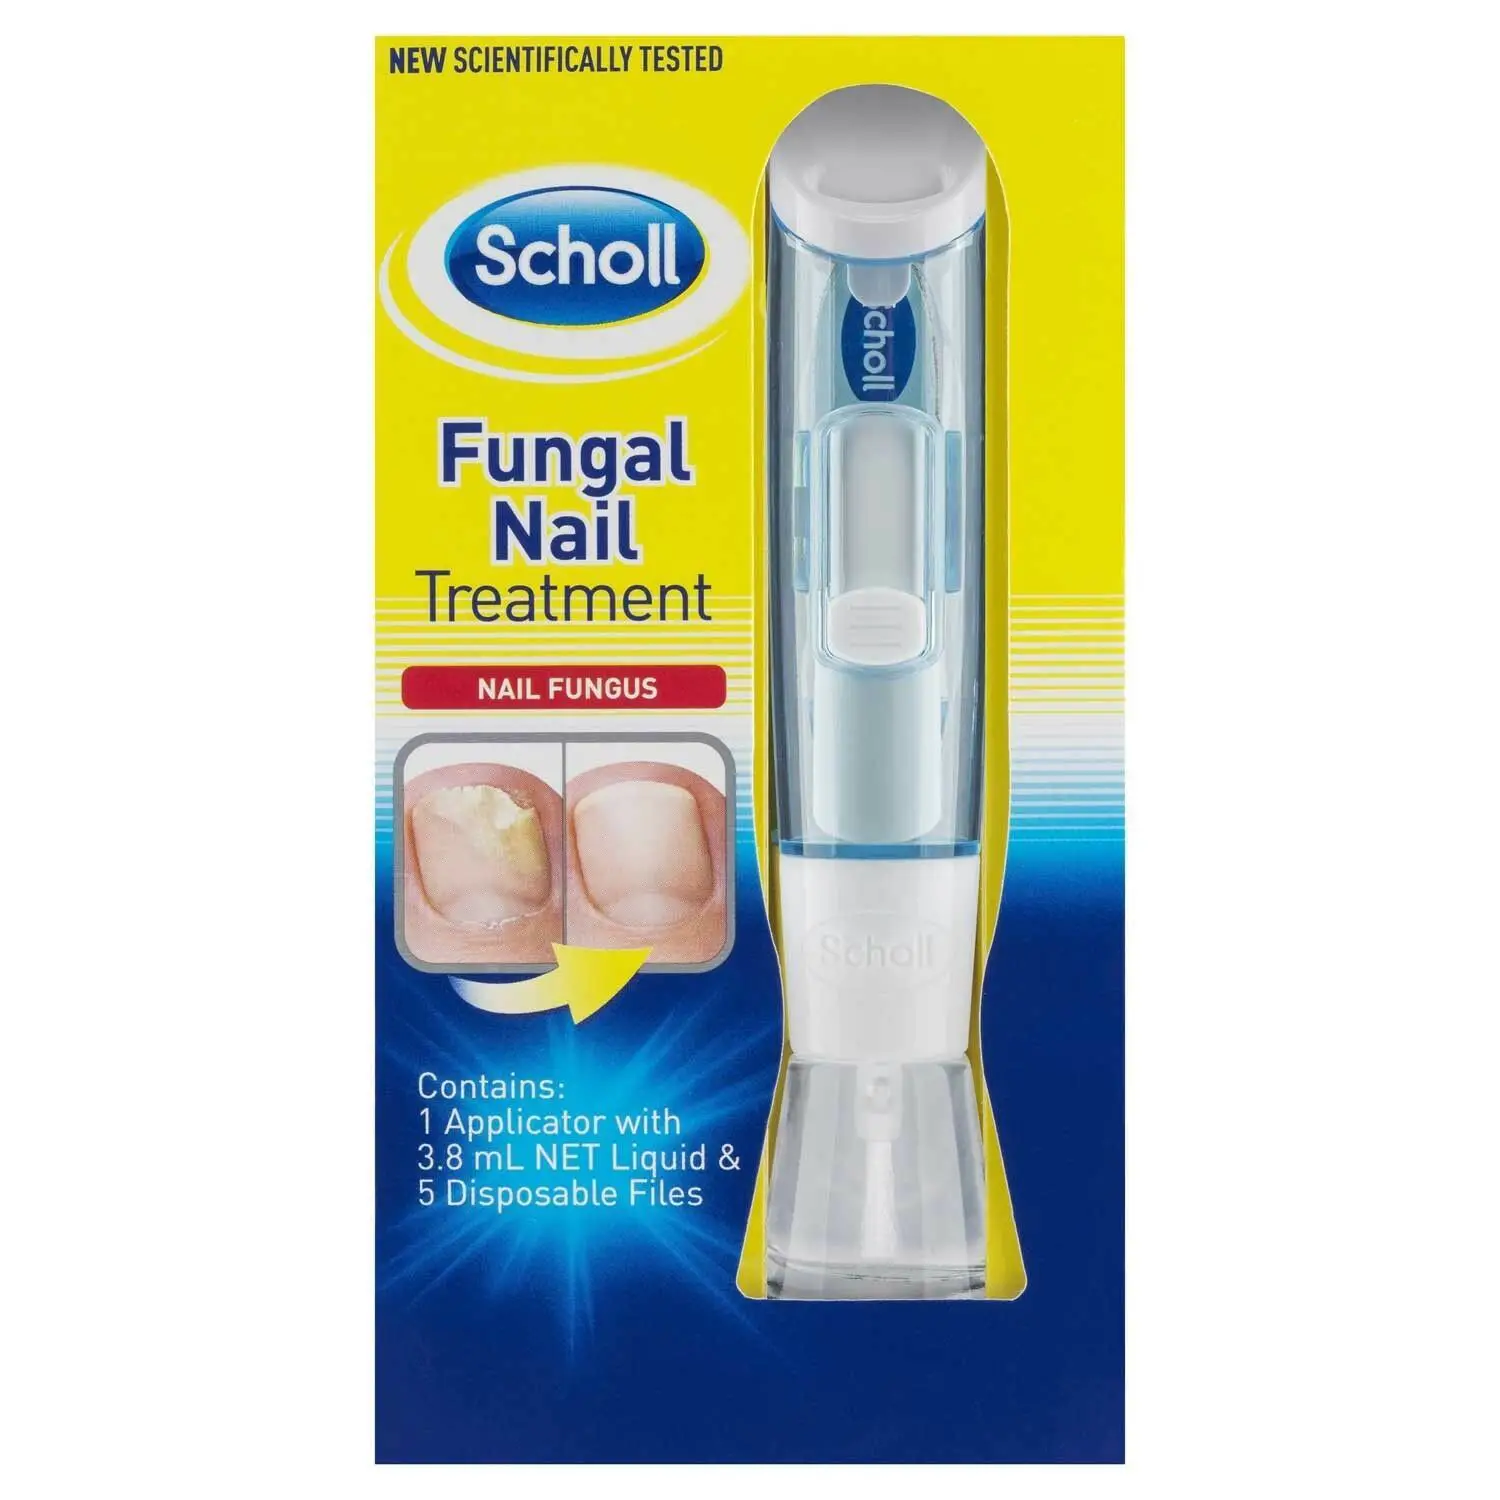 Scholl Fungal Nail Treatment 3.8ml proven to treat mild fungal nail ...